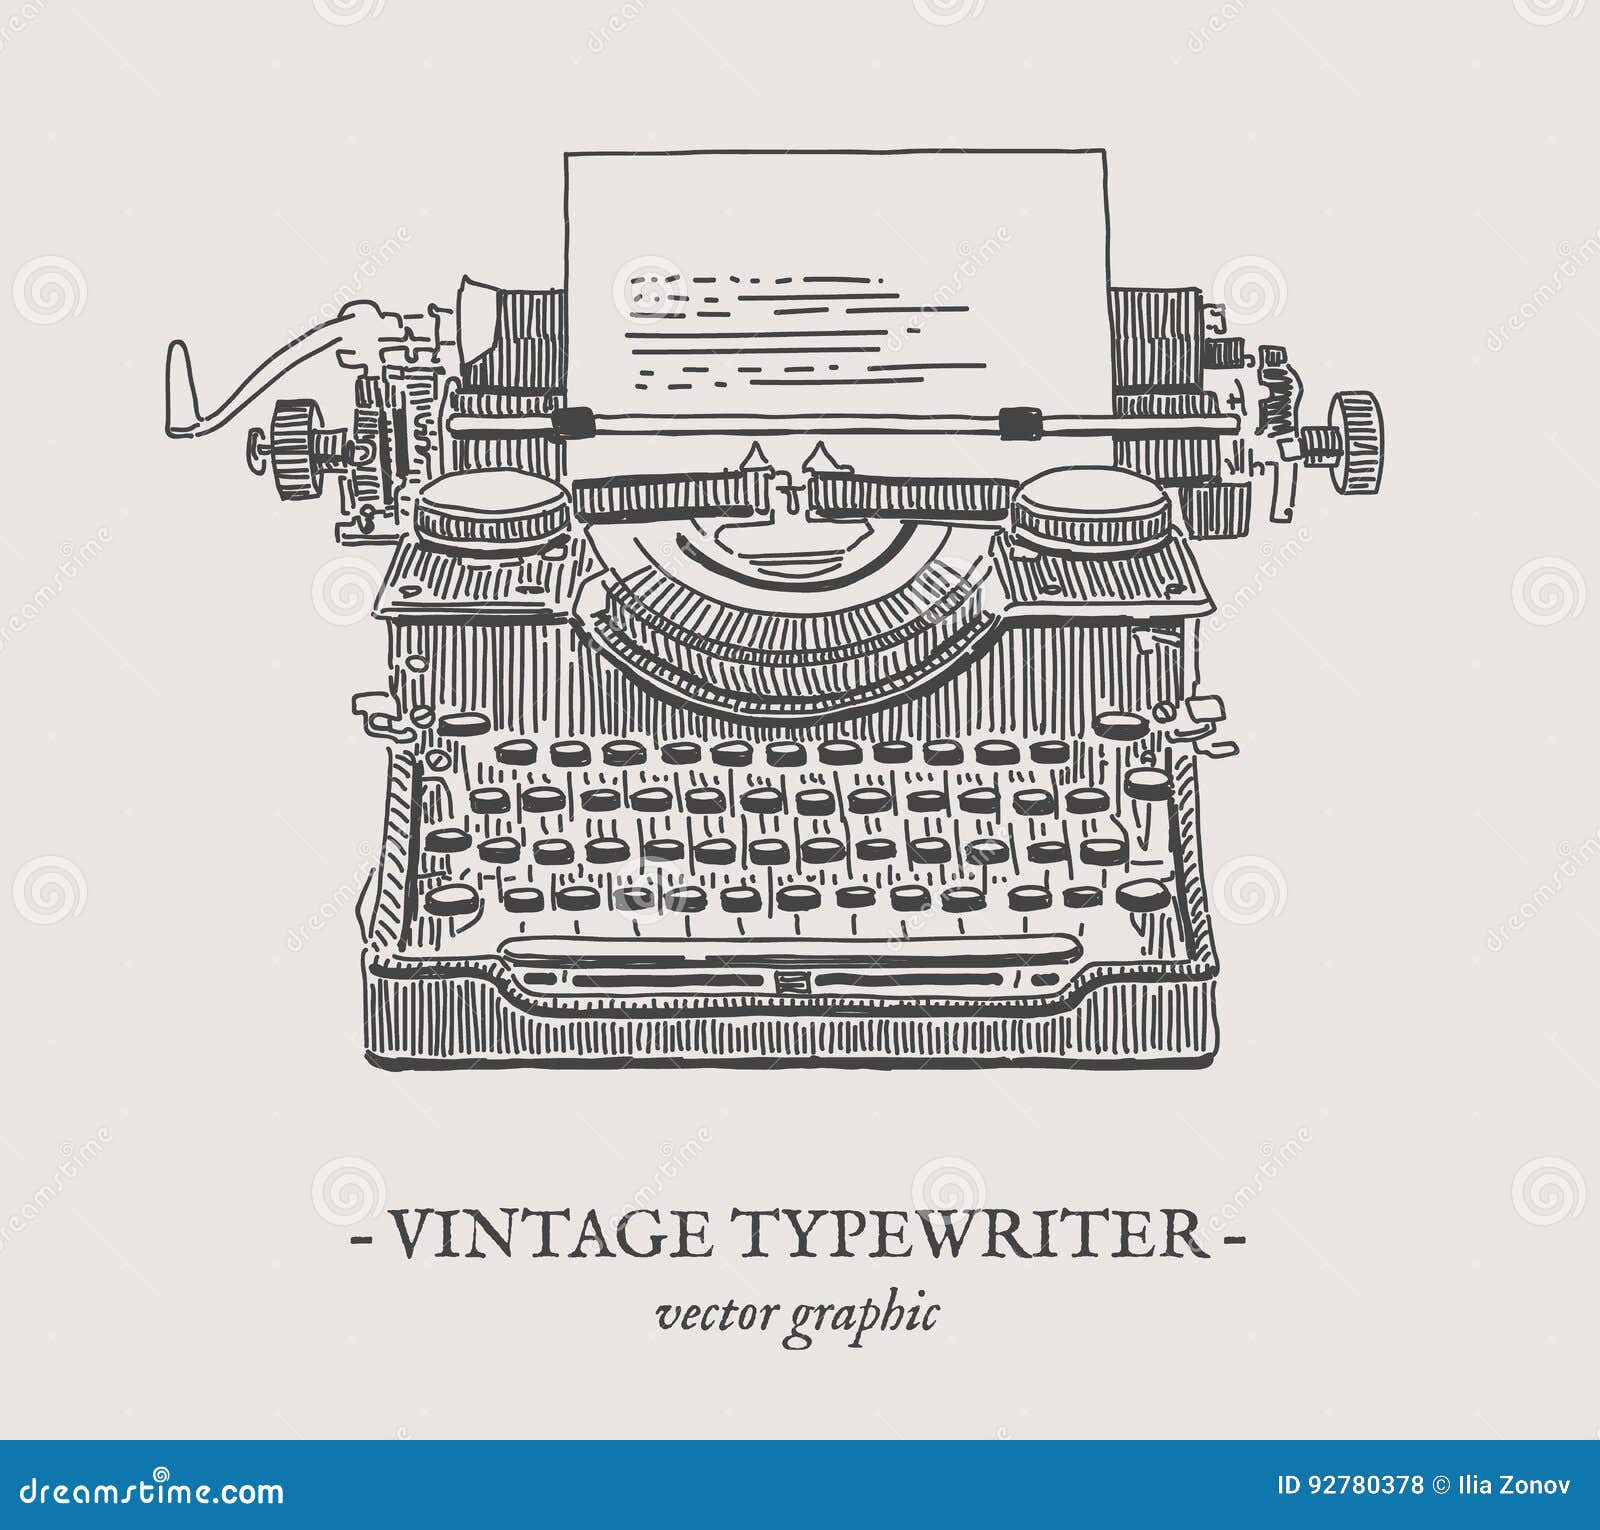 Typewriter Vector Old Vintage Keyboard Machine Retro Type Writer For Writing And Typing